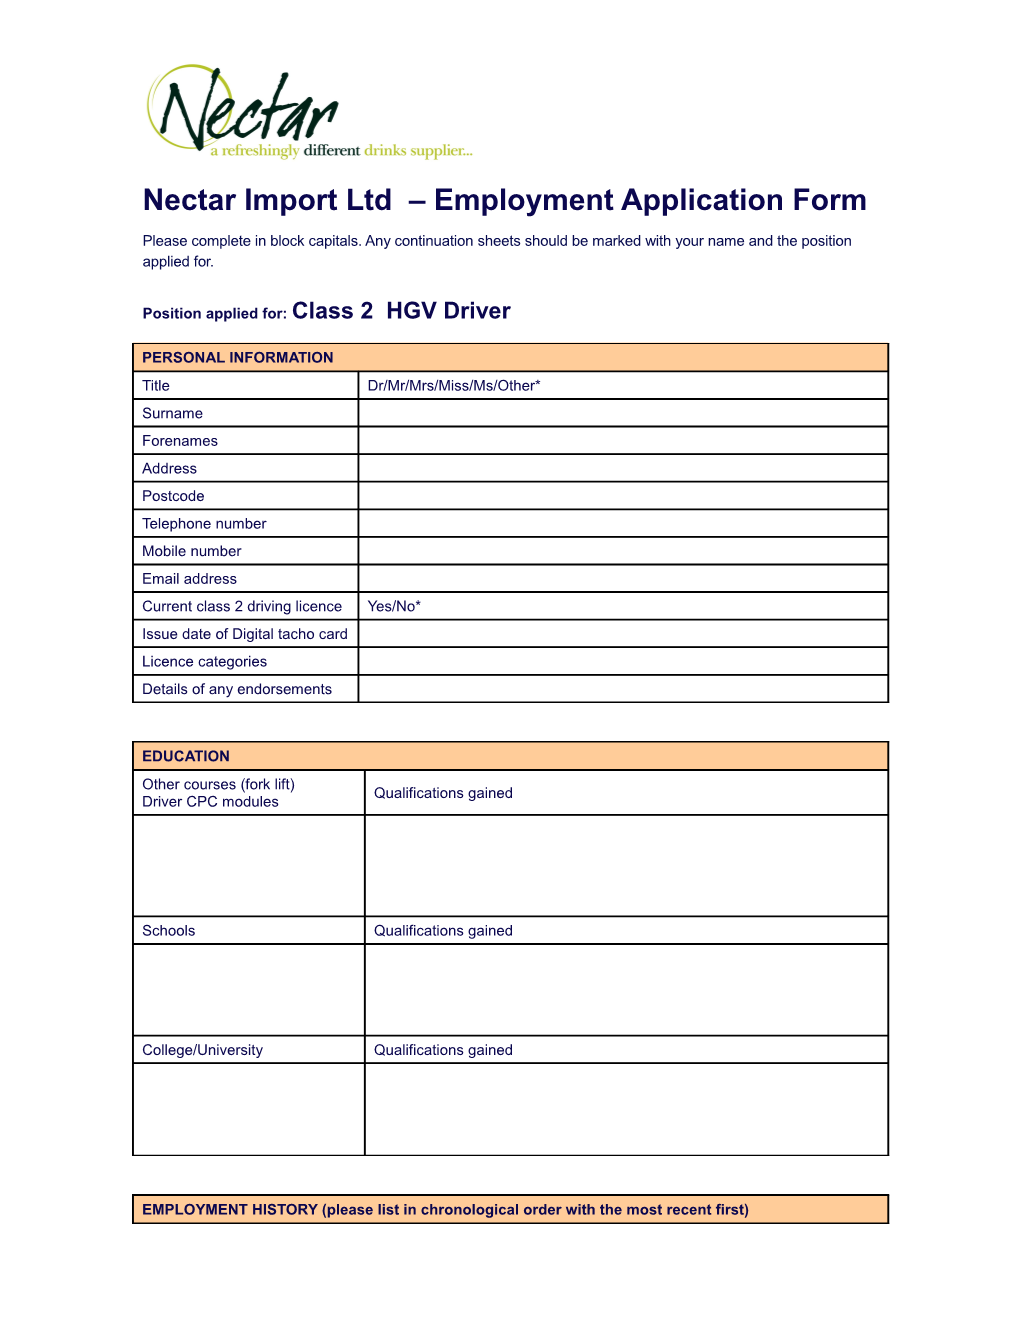 Nectar Import Ltd Employment Application Form